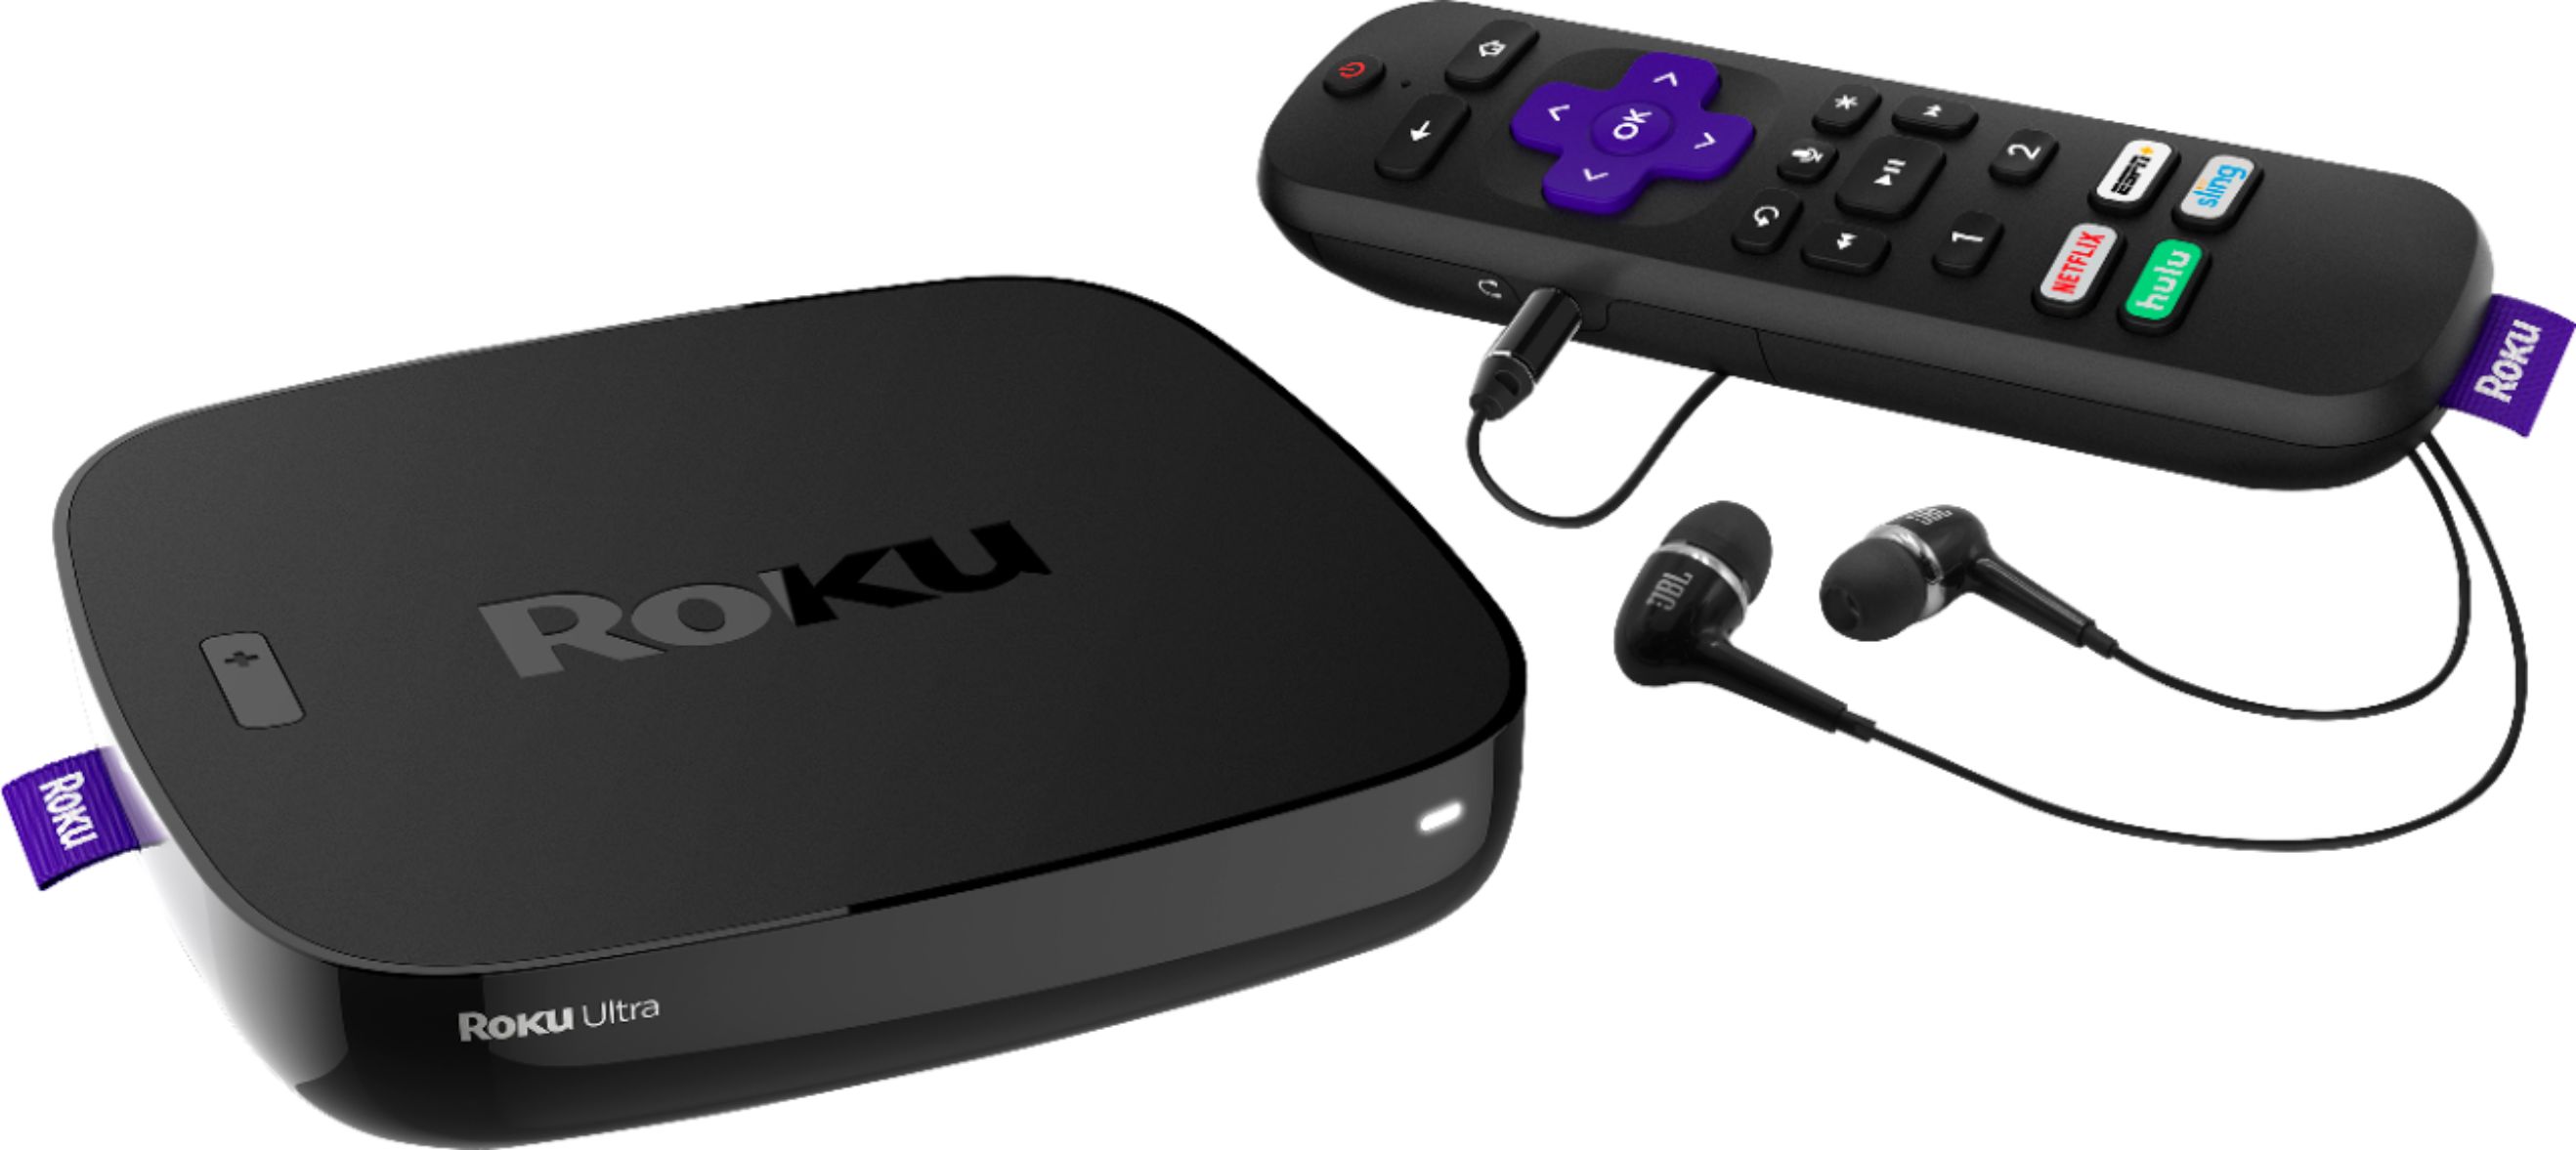 Roku Ultra HD/4K/HDR Streaming Media Player. Now Includes Premium JBL Headphones. 2018 